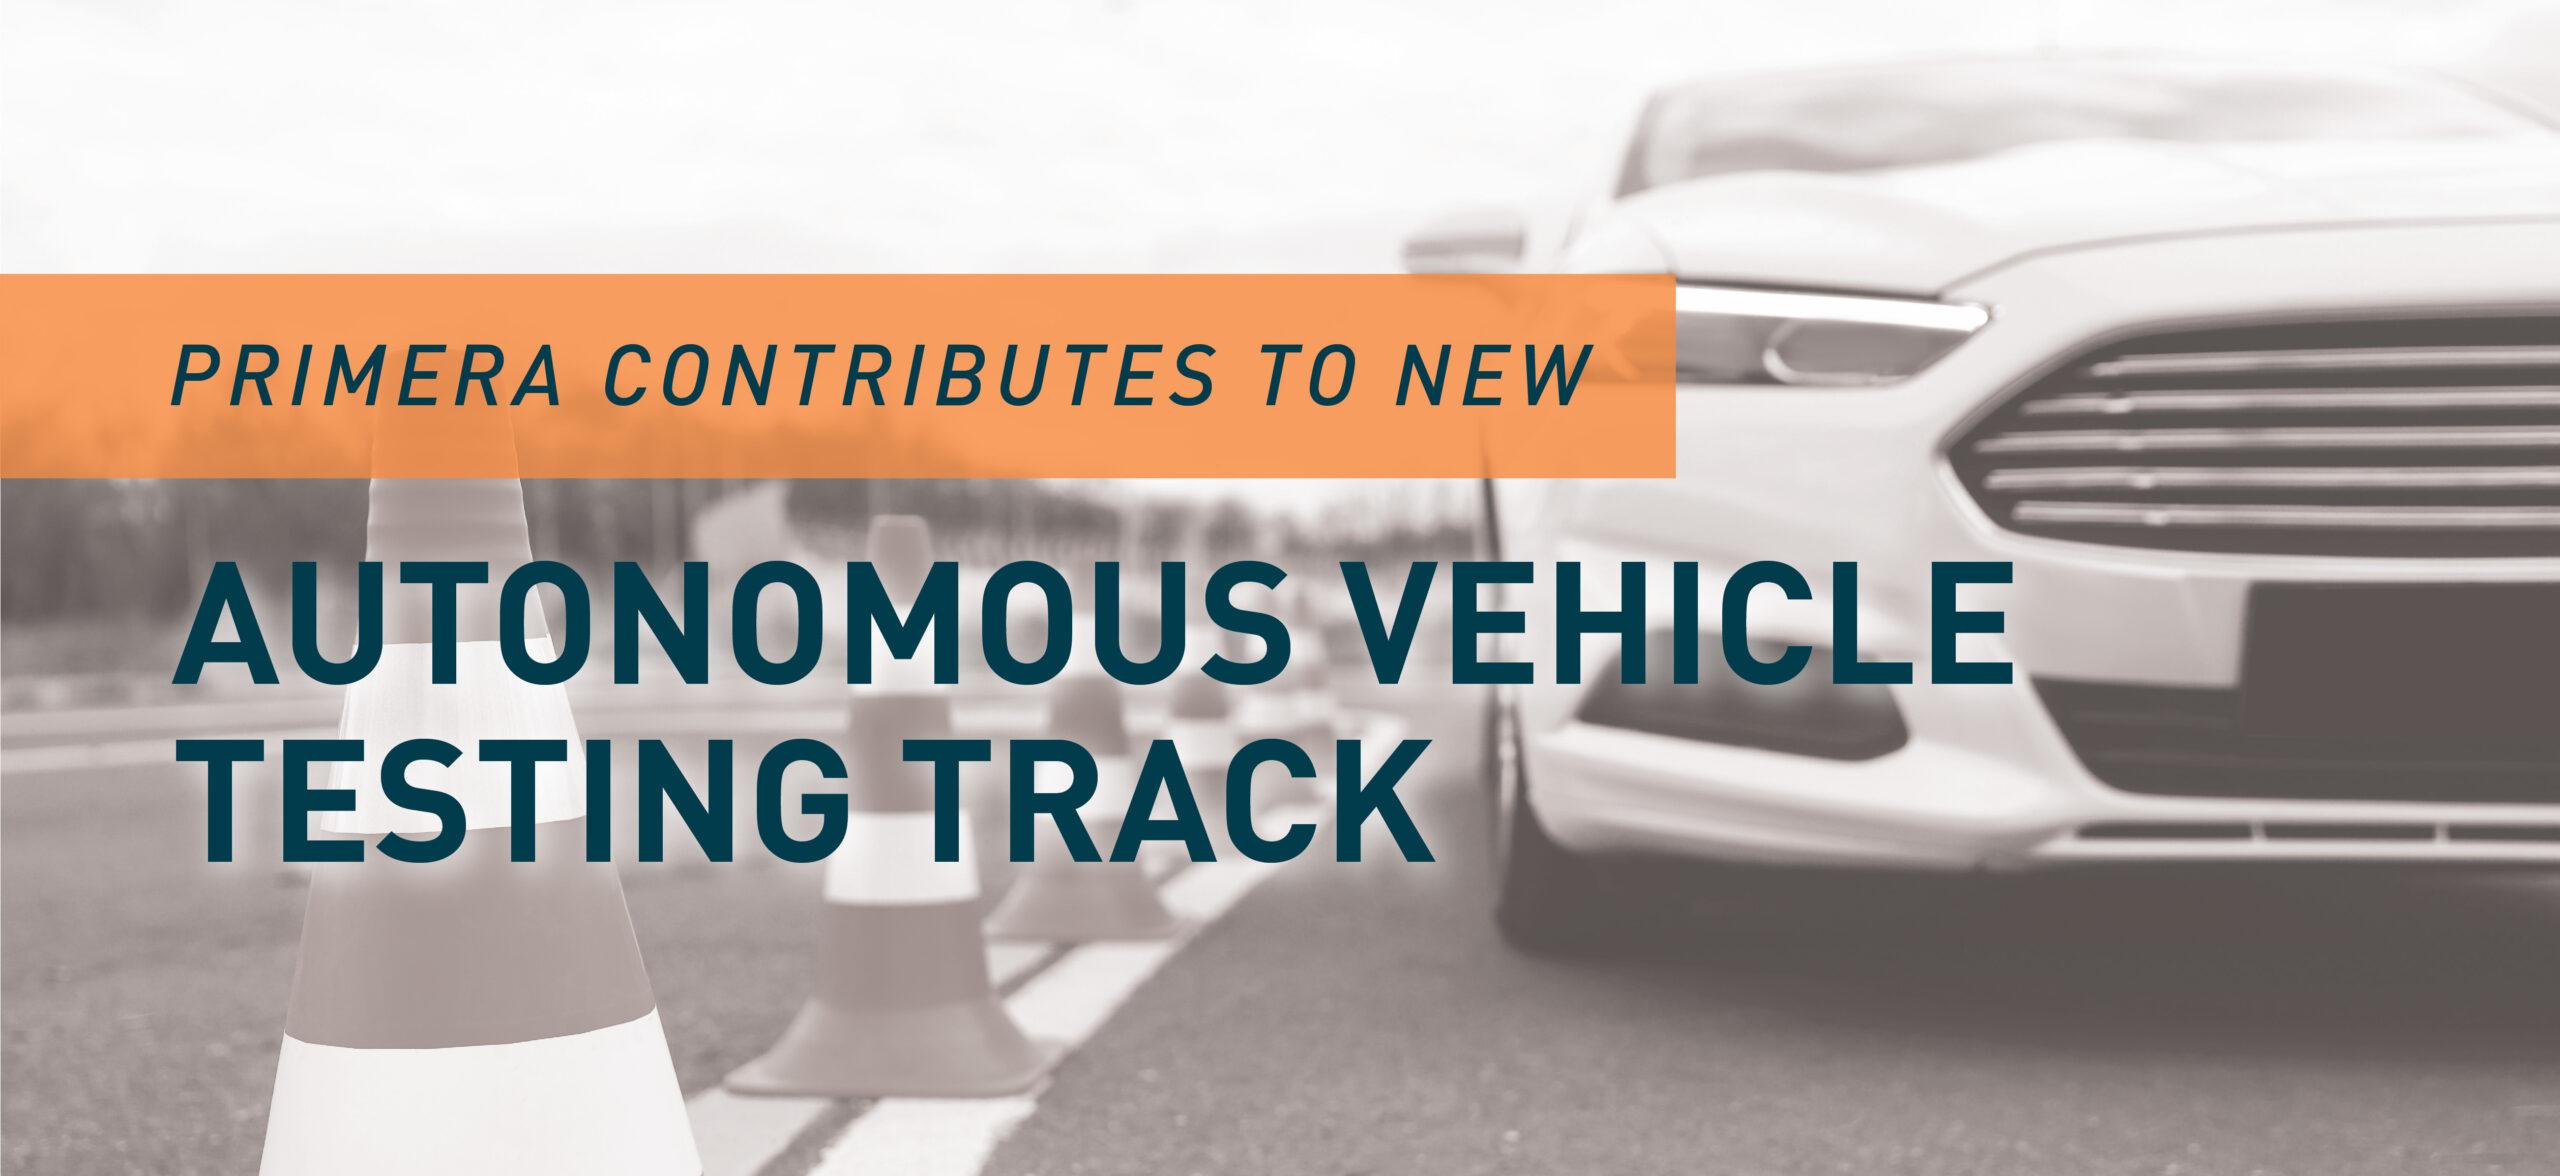 Primera Helps Shape the Future of Transport via a New Autonomous Vehicle Testing Track